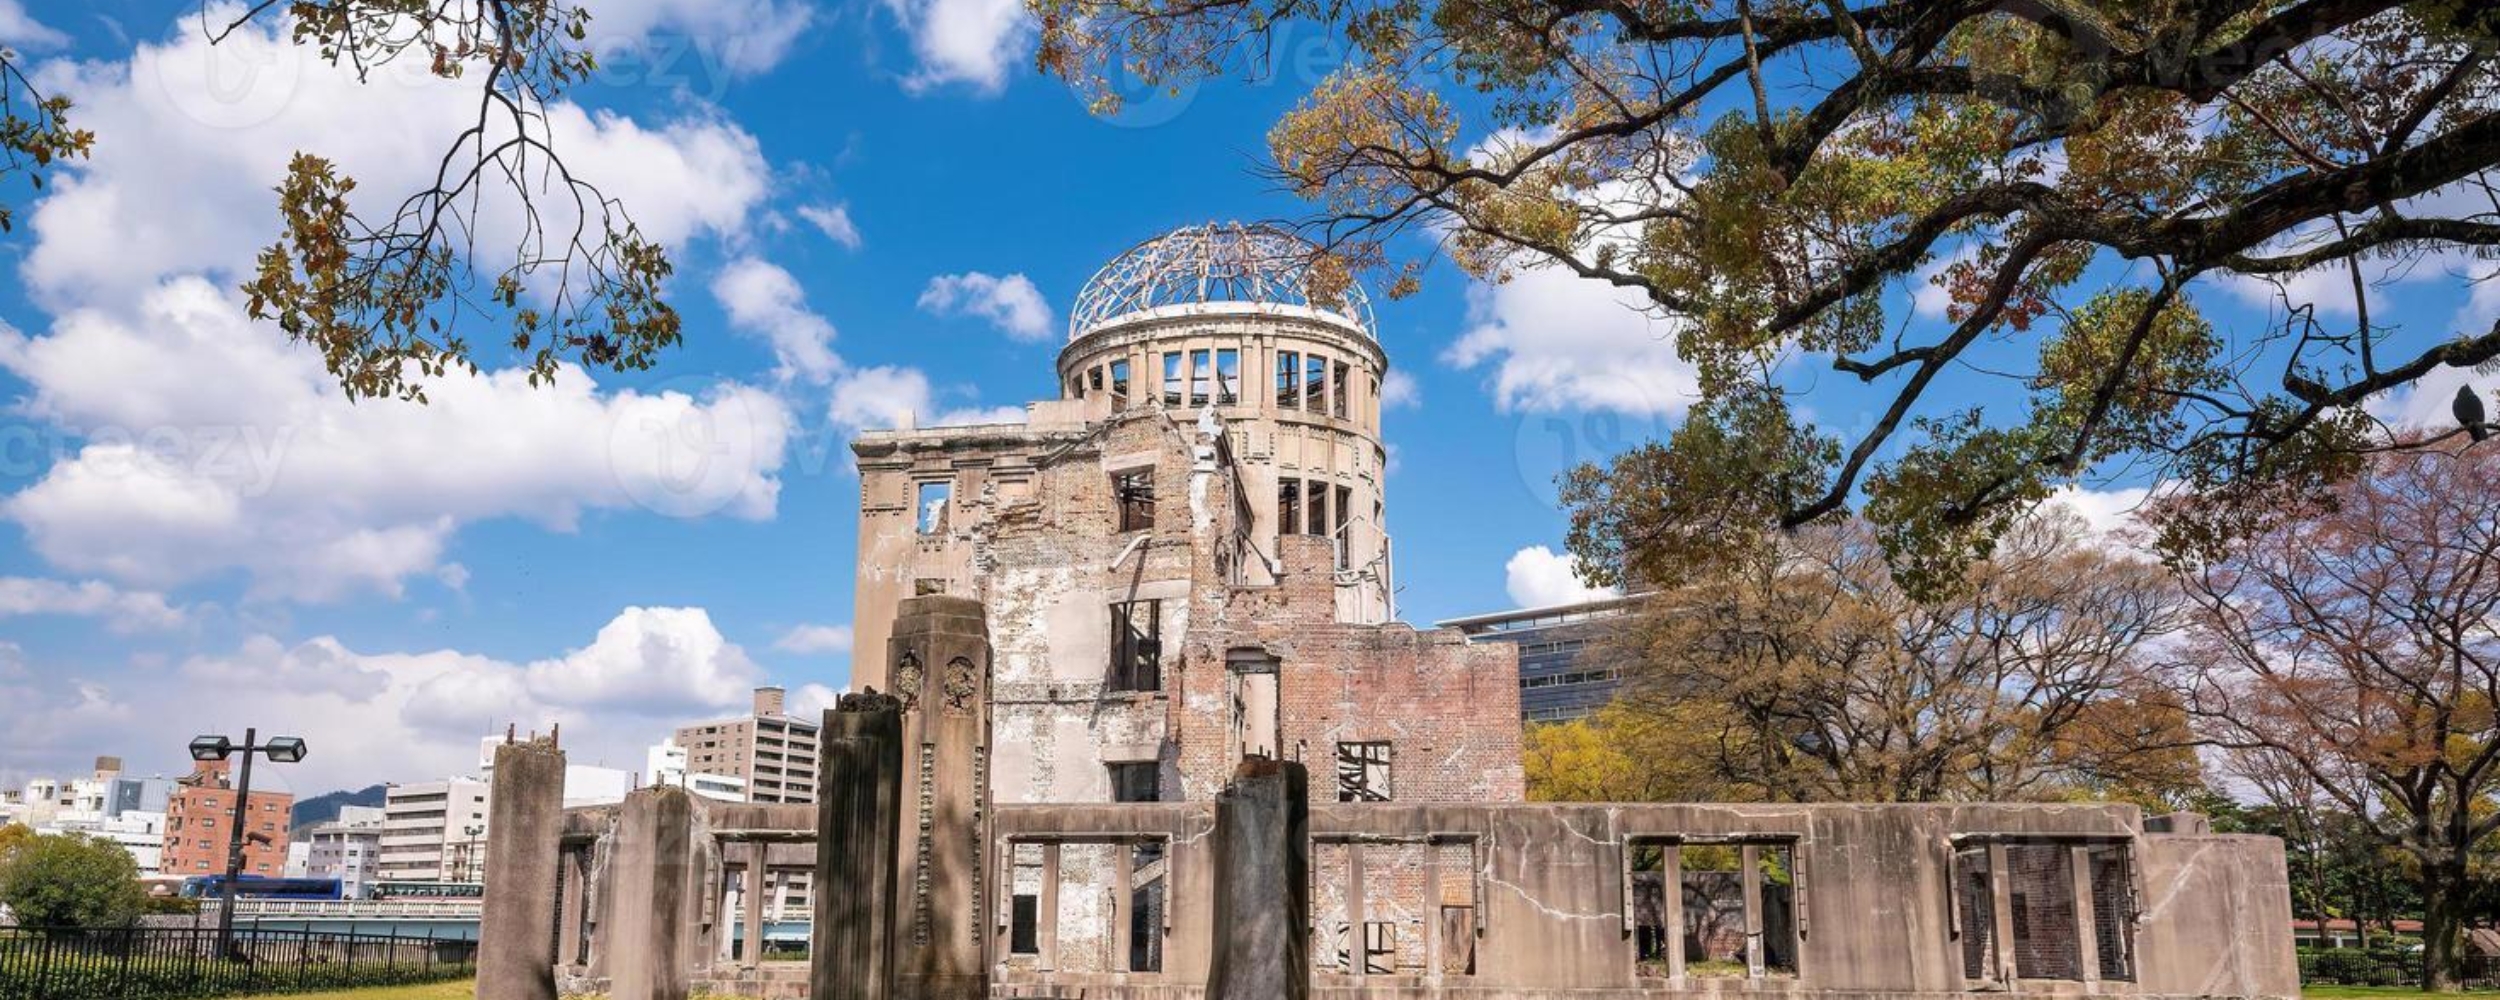 Hiroshima atomic bomb dome and the cherry blossom in kobe photo